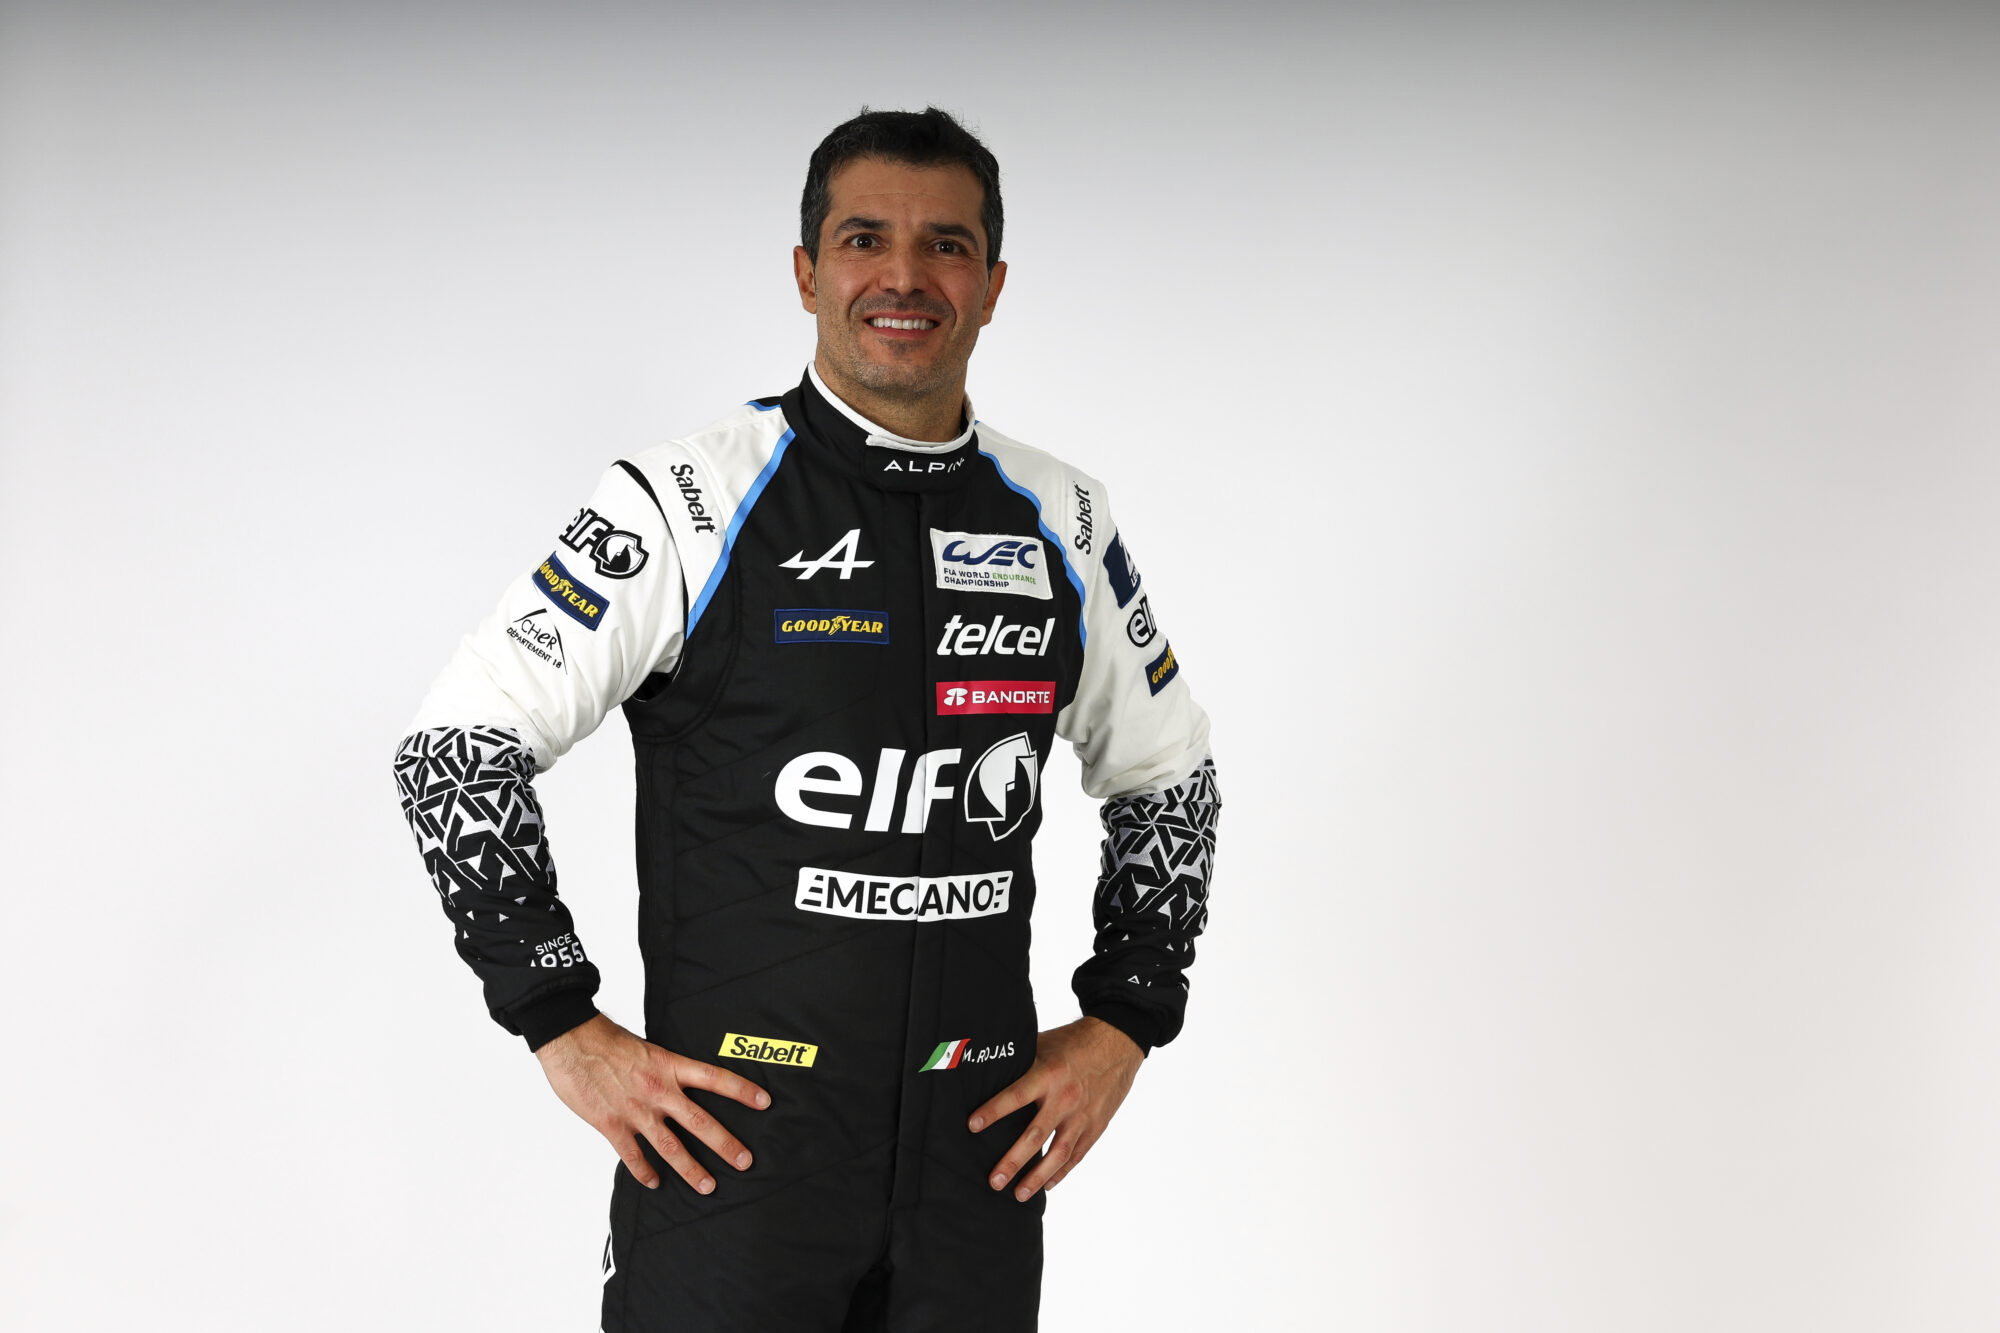 Saison 2023 Championnat du Monde FIA dEndurance WEC - Alpine Elf Endurance Team - LMP2